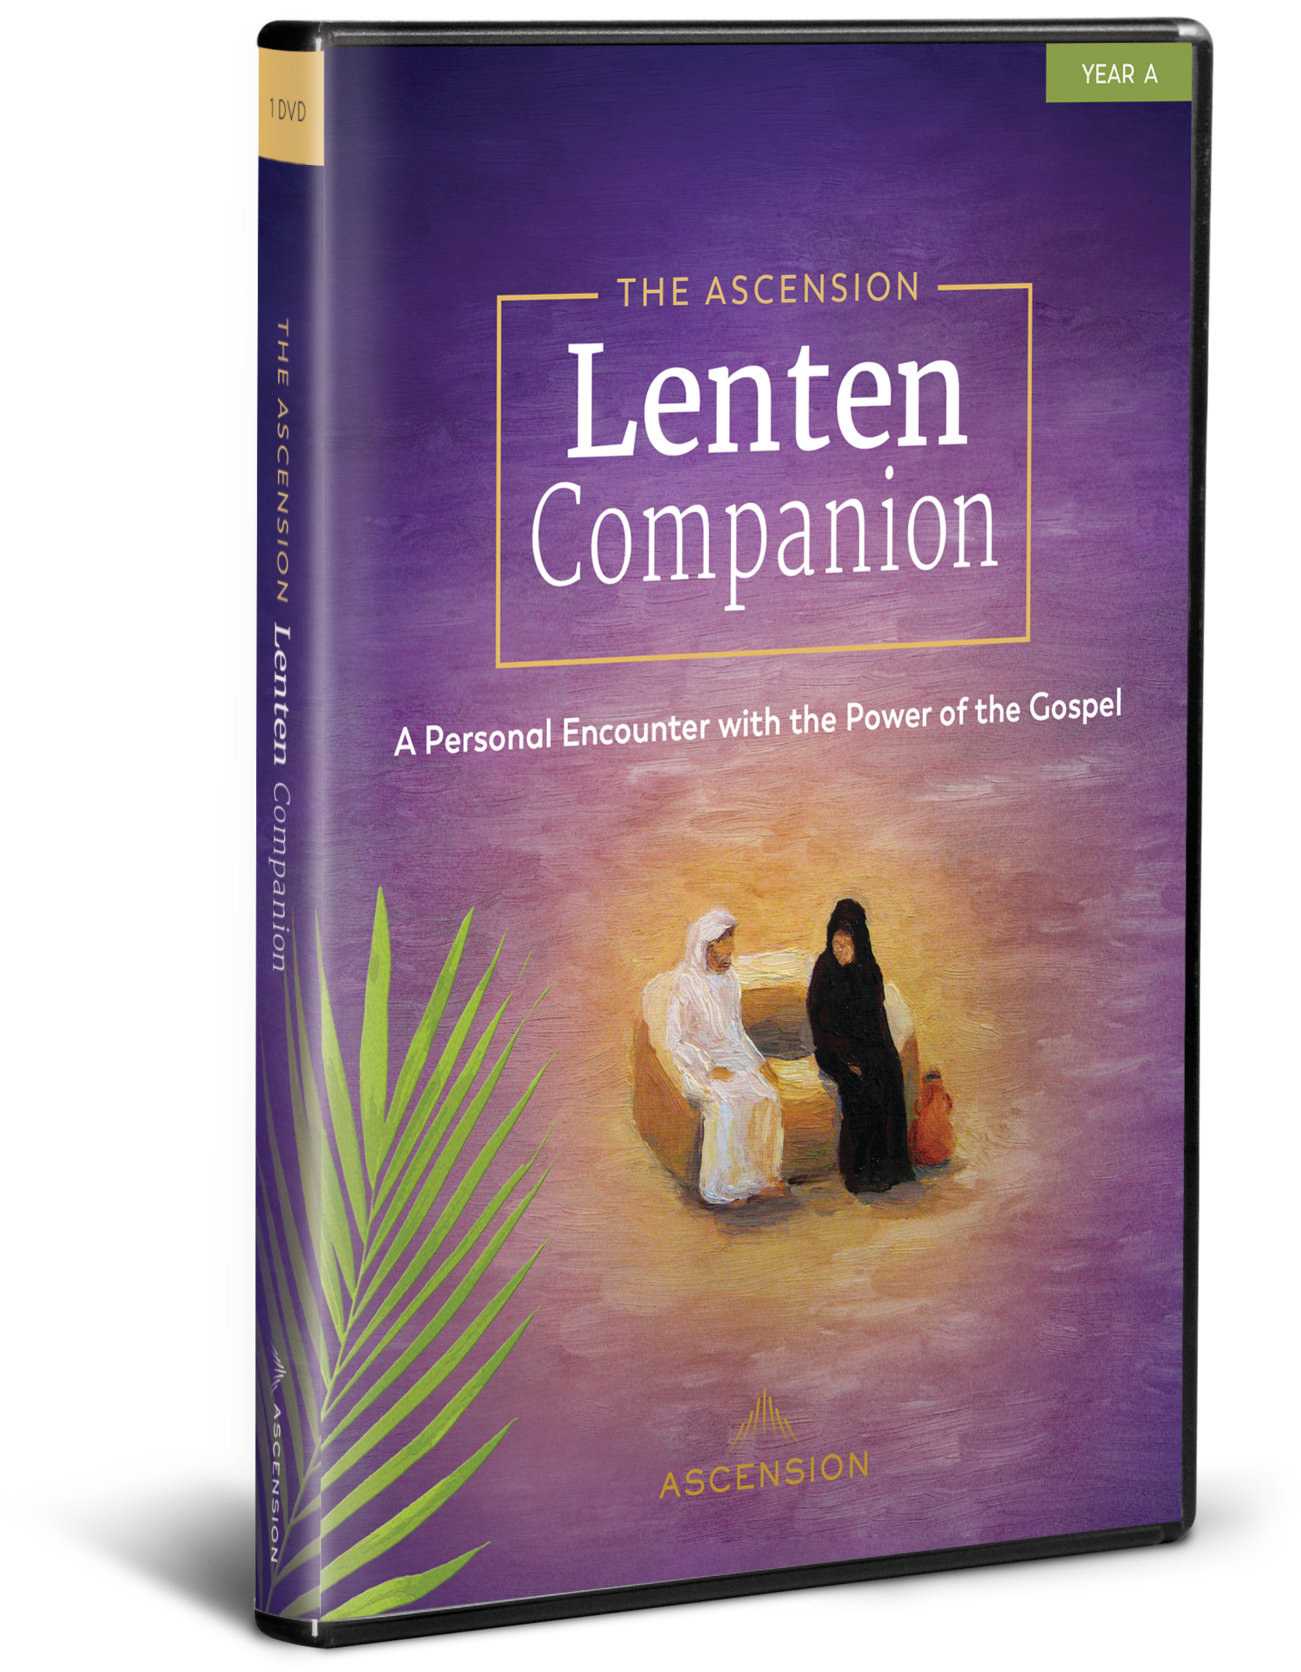 Lenten Companion D V D Cover